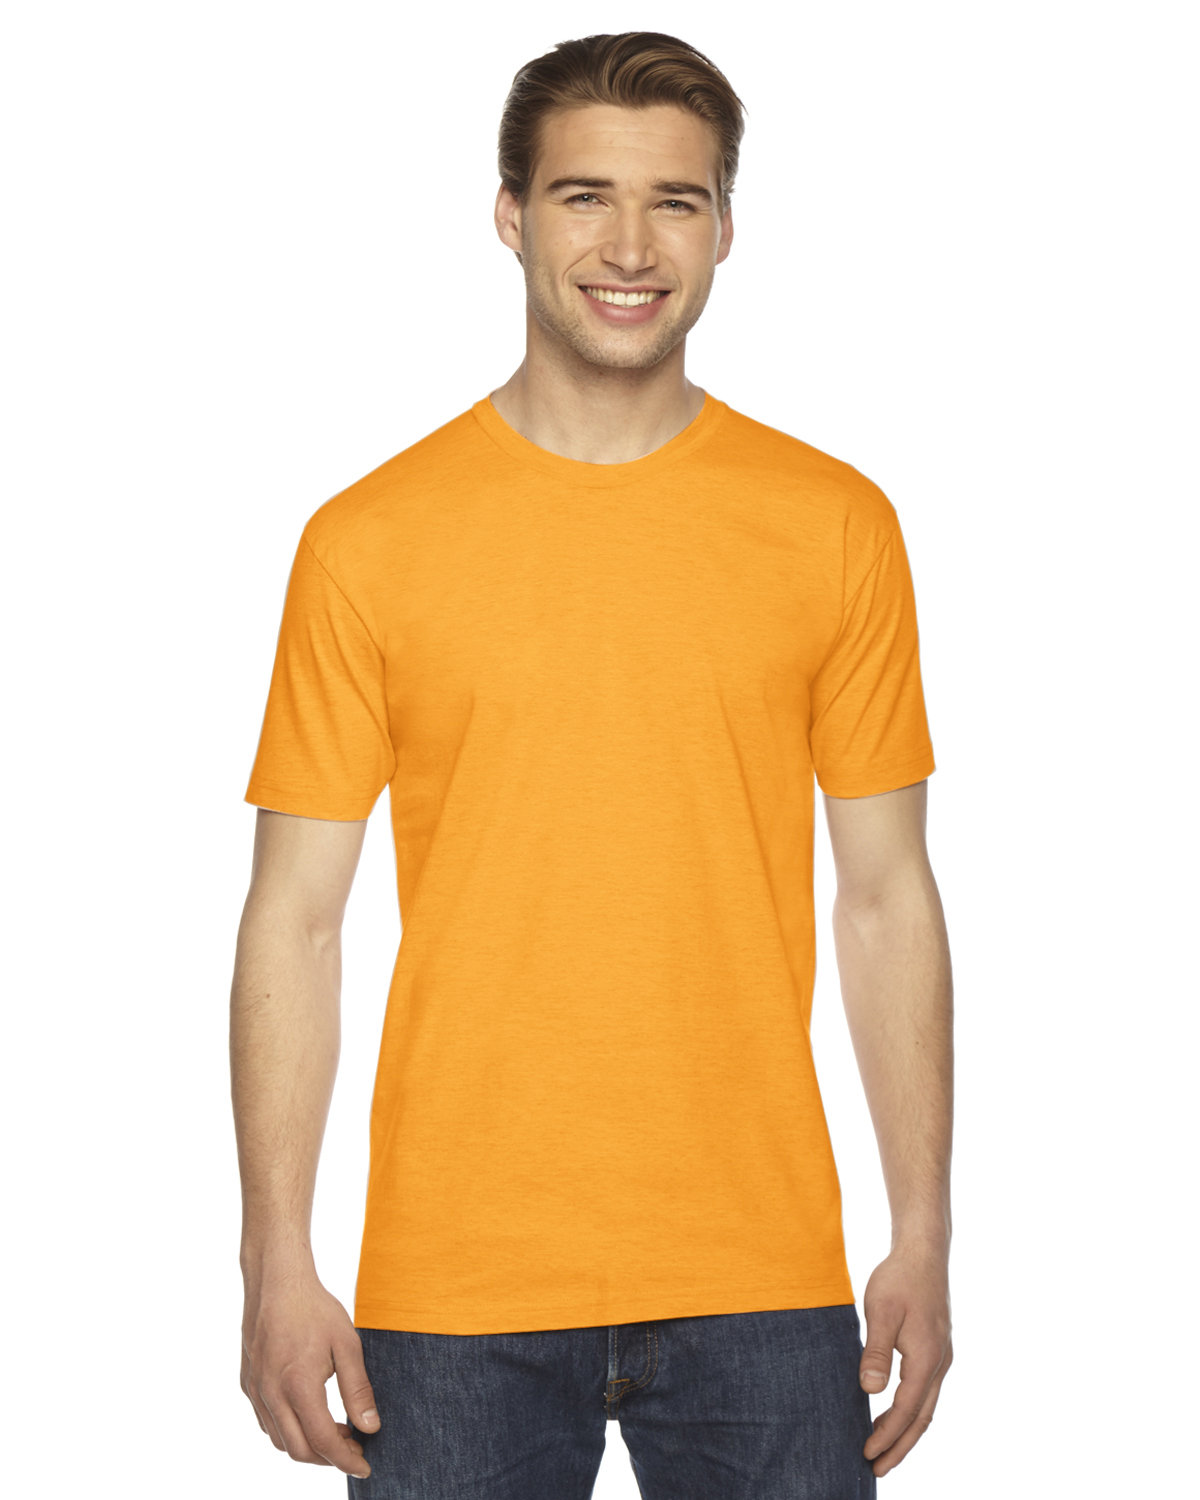 American Apparel Unisex Fine Jersey Short-Sleeve T-Shirt GOLD 